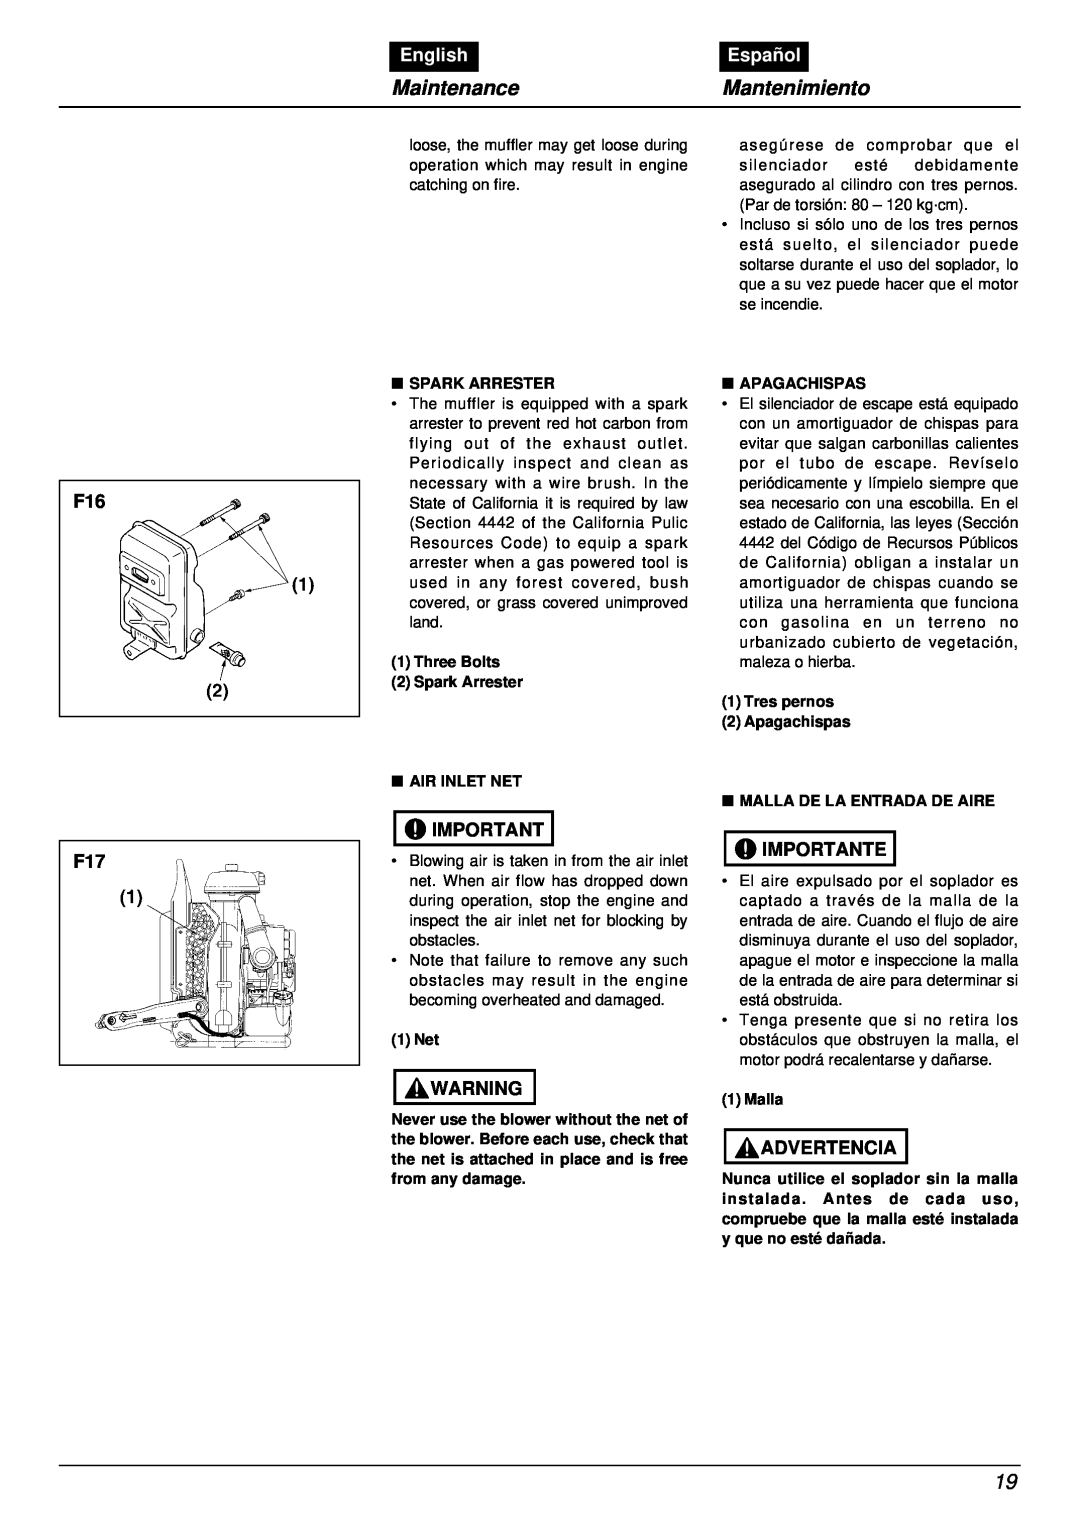 RedMax EB7001RH manual F16 F17, MaintenanceMantenimiento, English, Español, Importante, Advertencia 